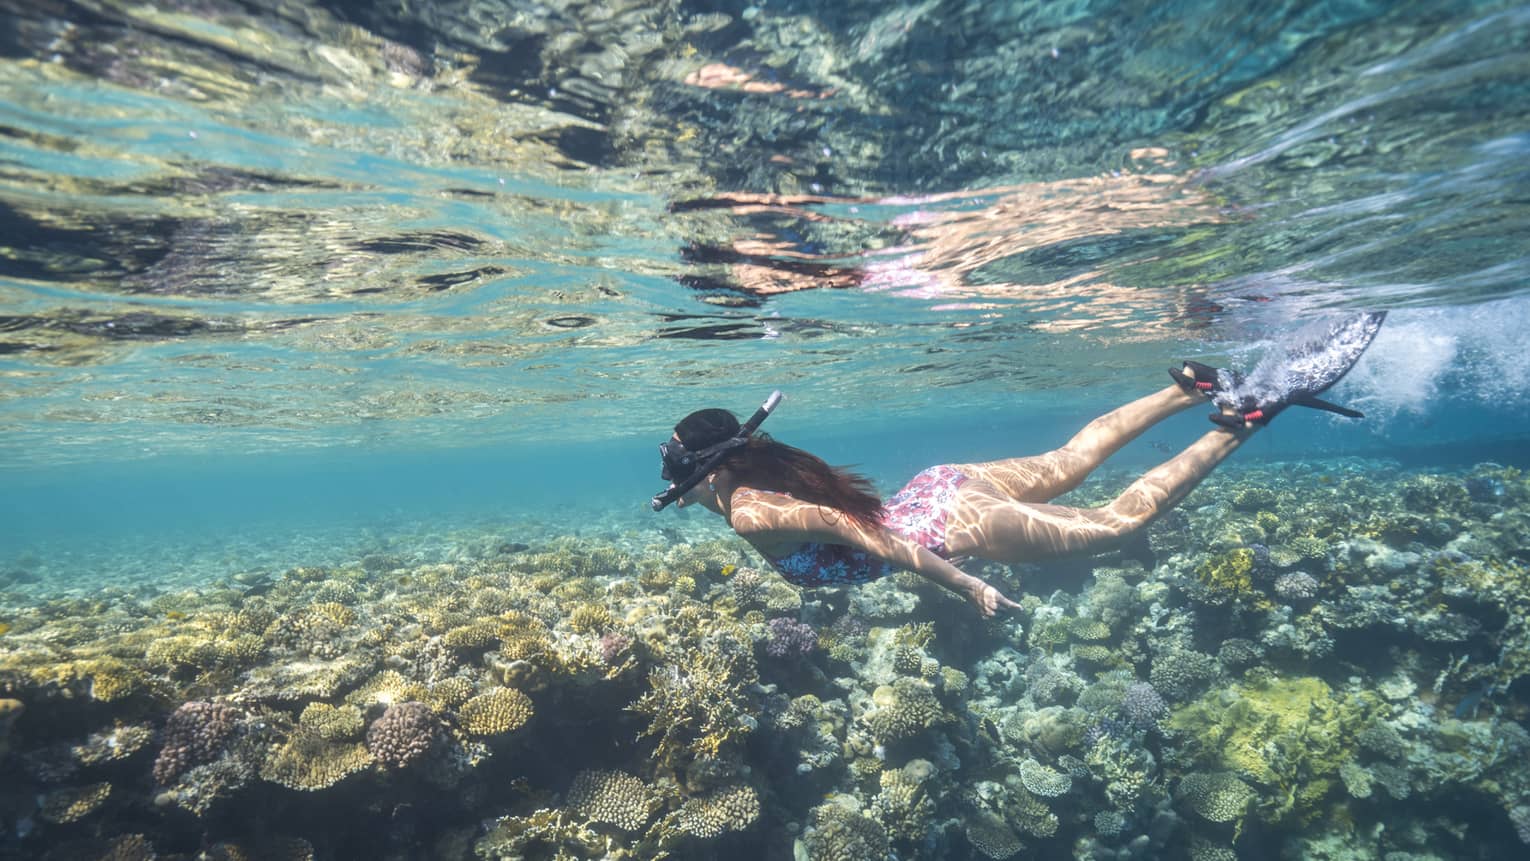 A woman snorkeling in the ocean.